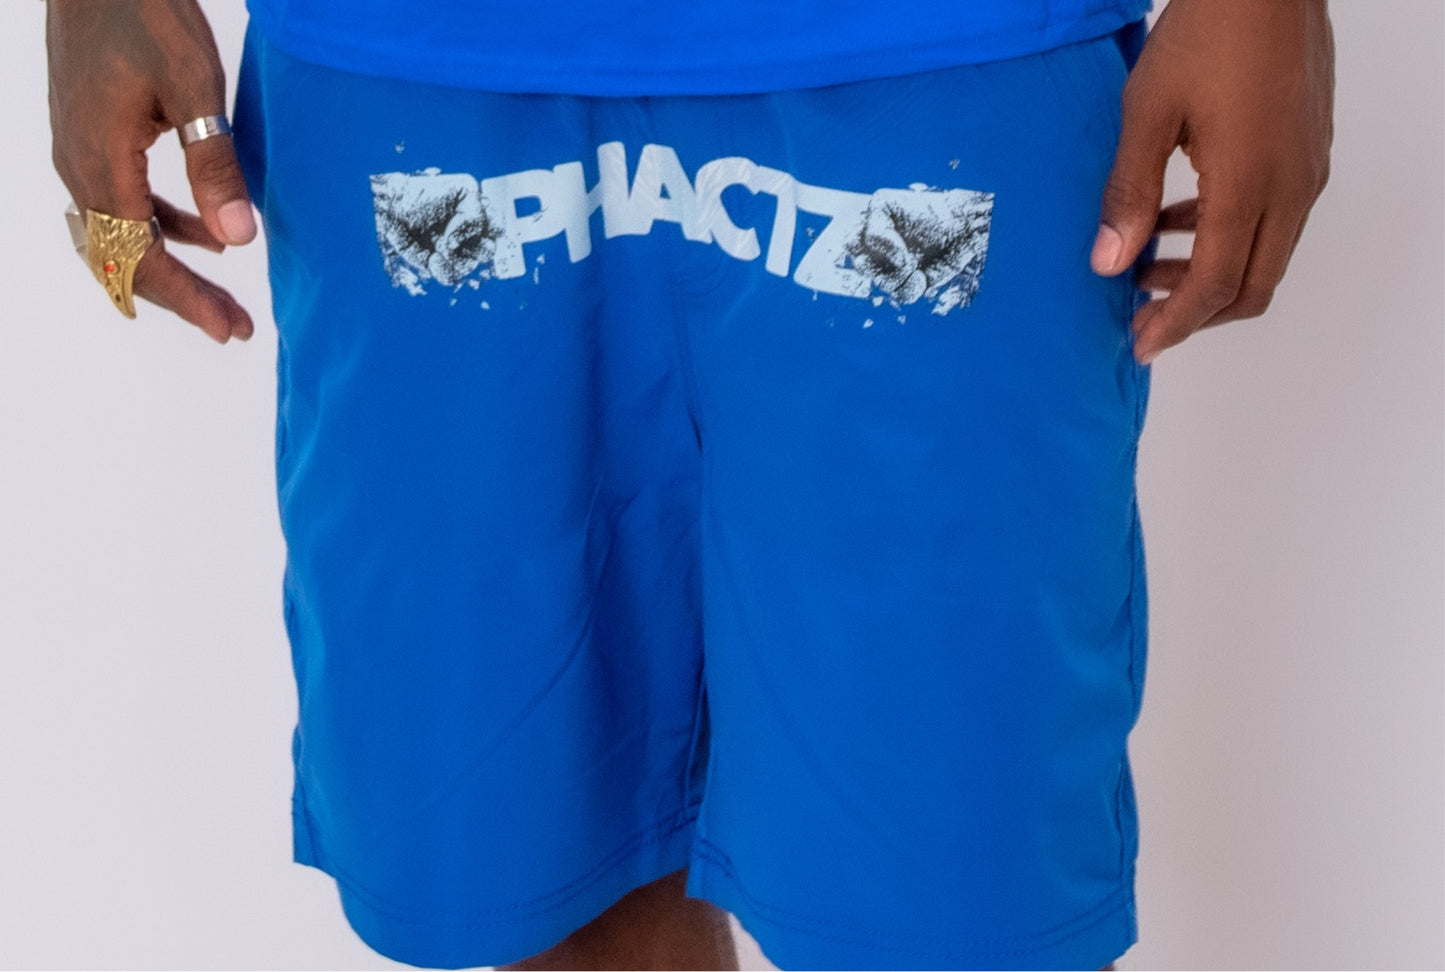 Phactz shorts